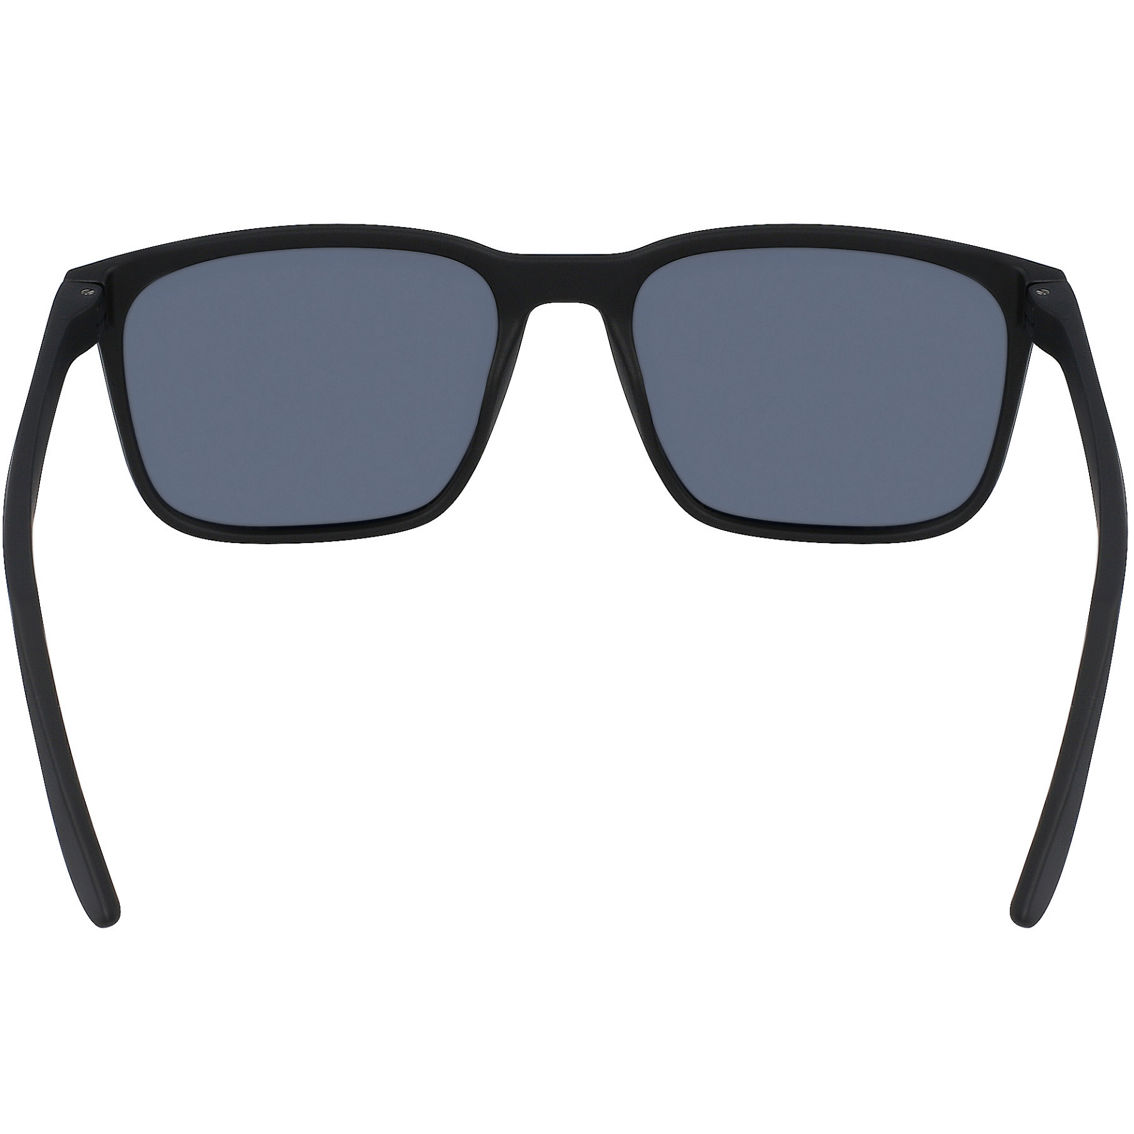 Nike Rave Polarized Men's/Women's Sunglasses FD1849 013 - Image 2 of 5